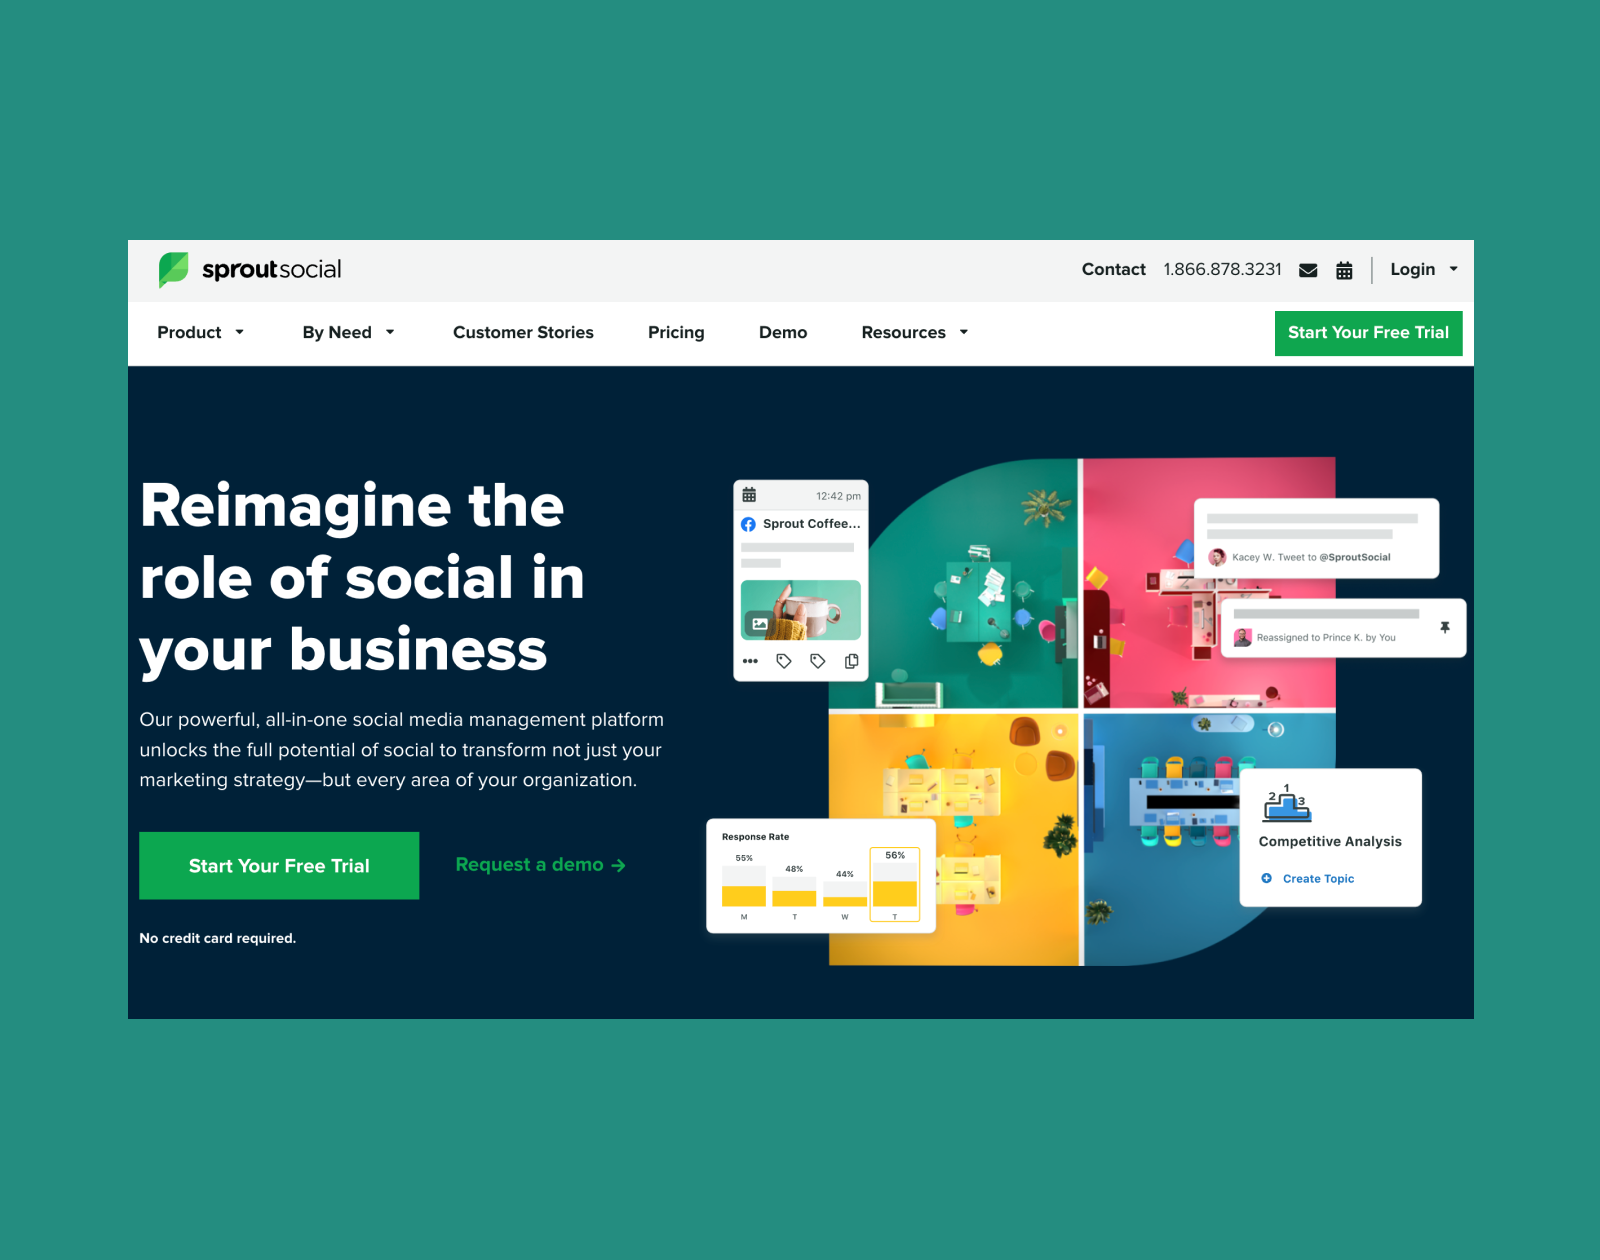 Sprout Social: Social Media Management Solutions